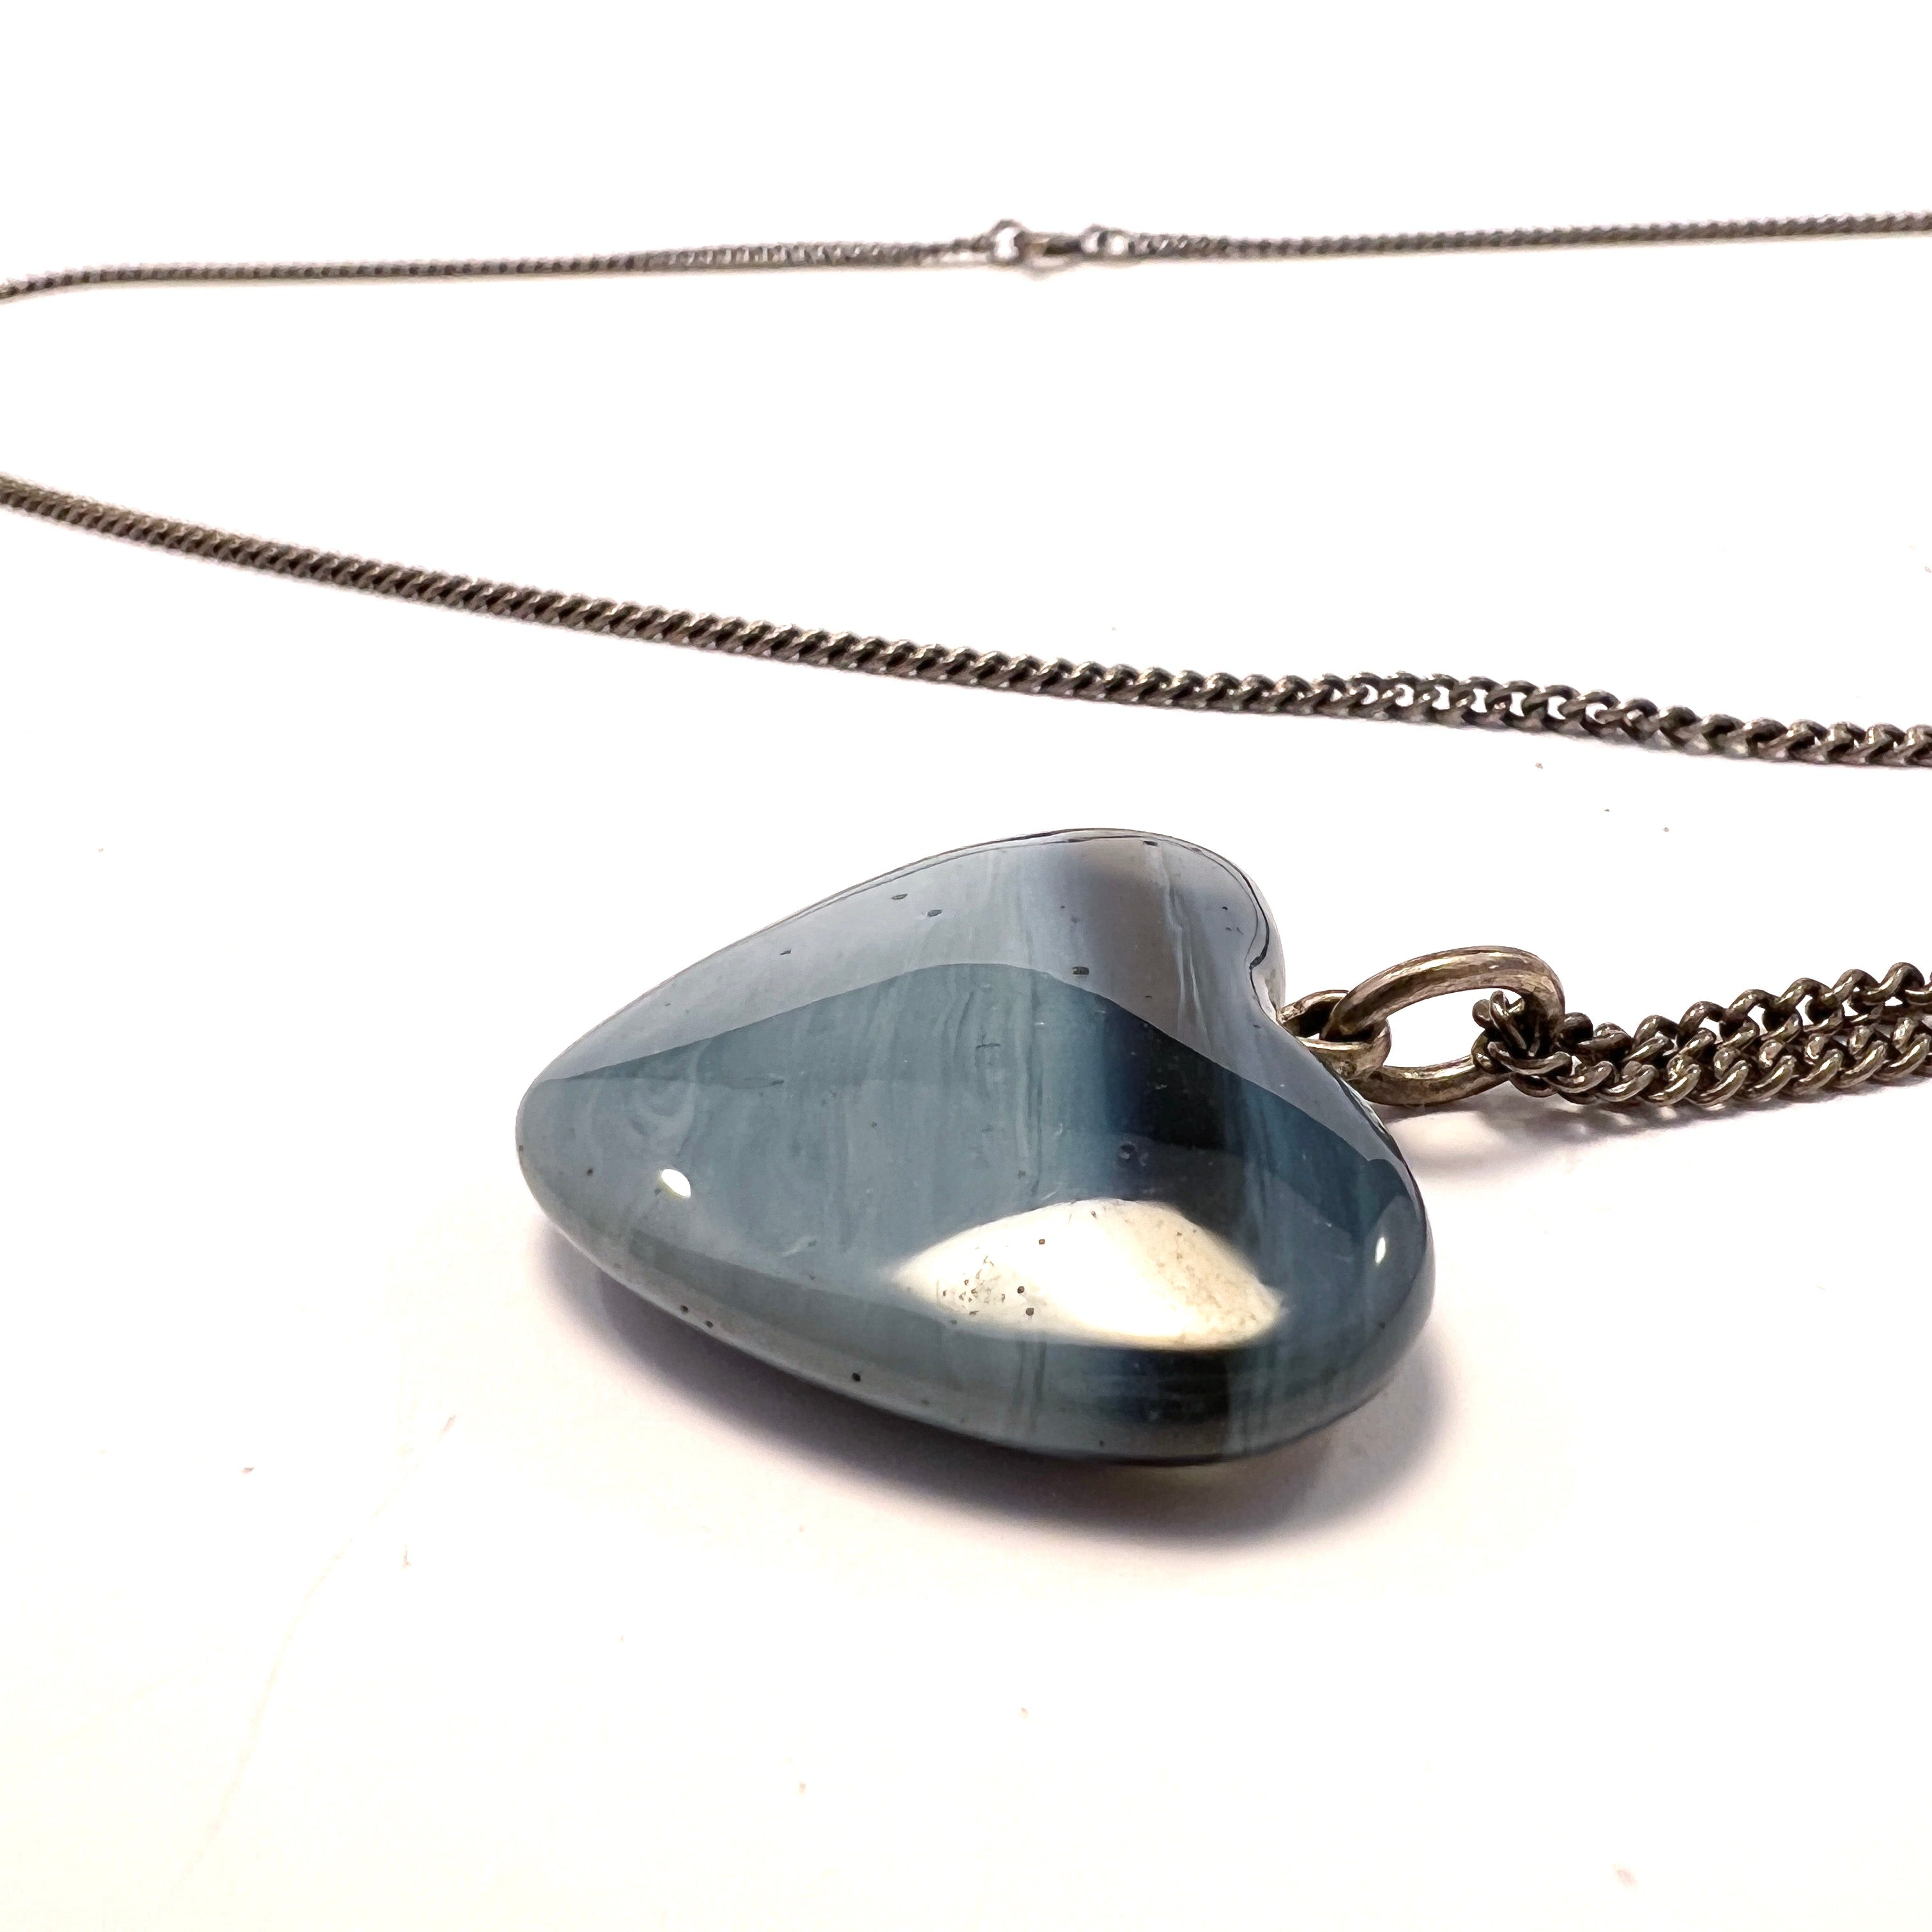 North Sweden c 1960s. Silver Bergslagen-stone Heart Pendant Necklace.